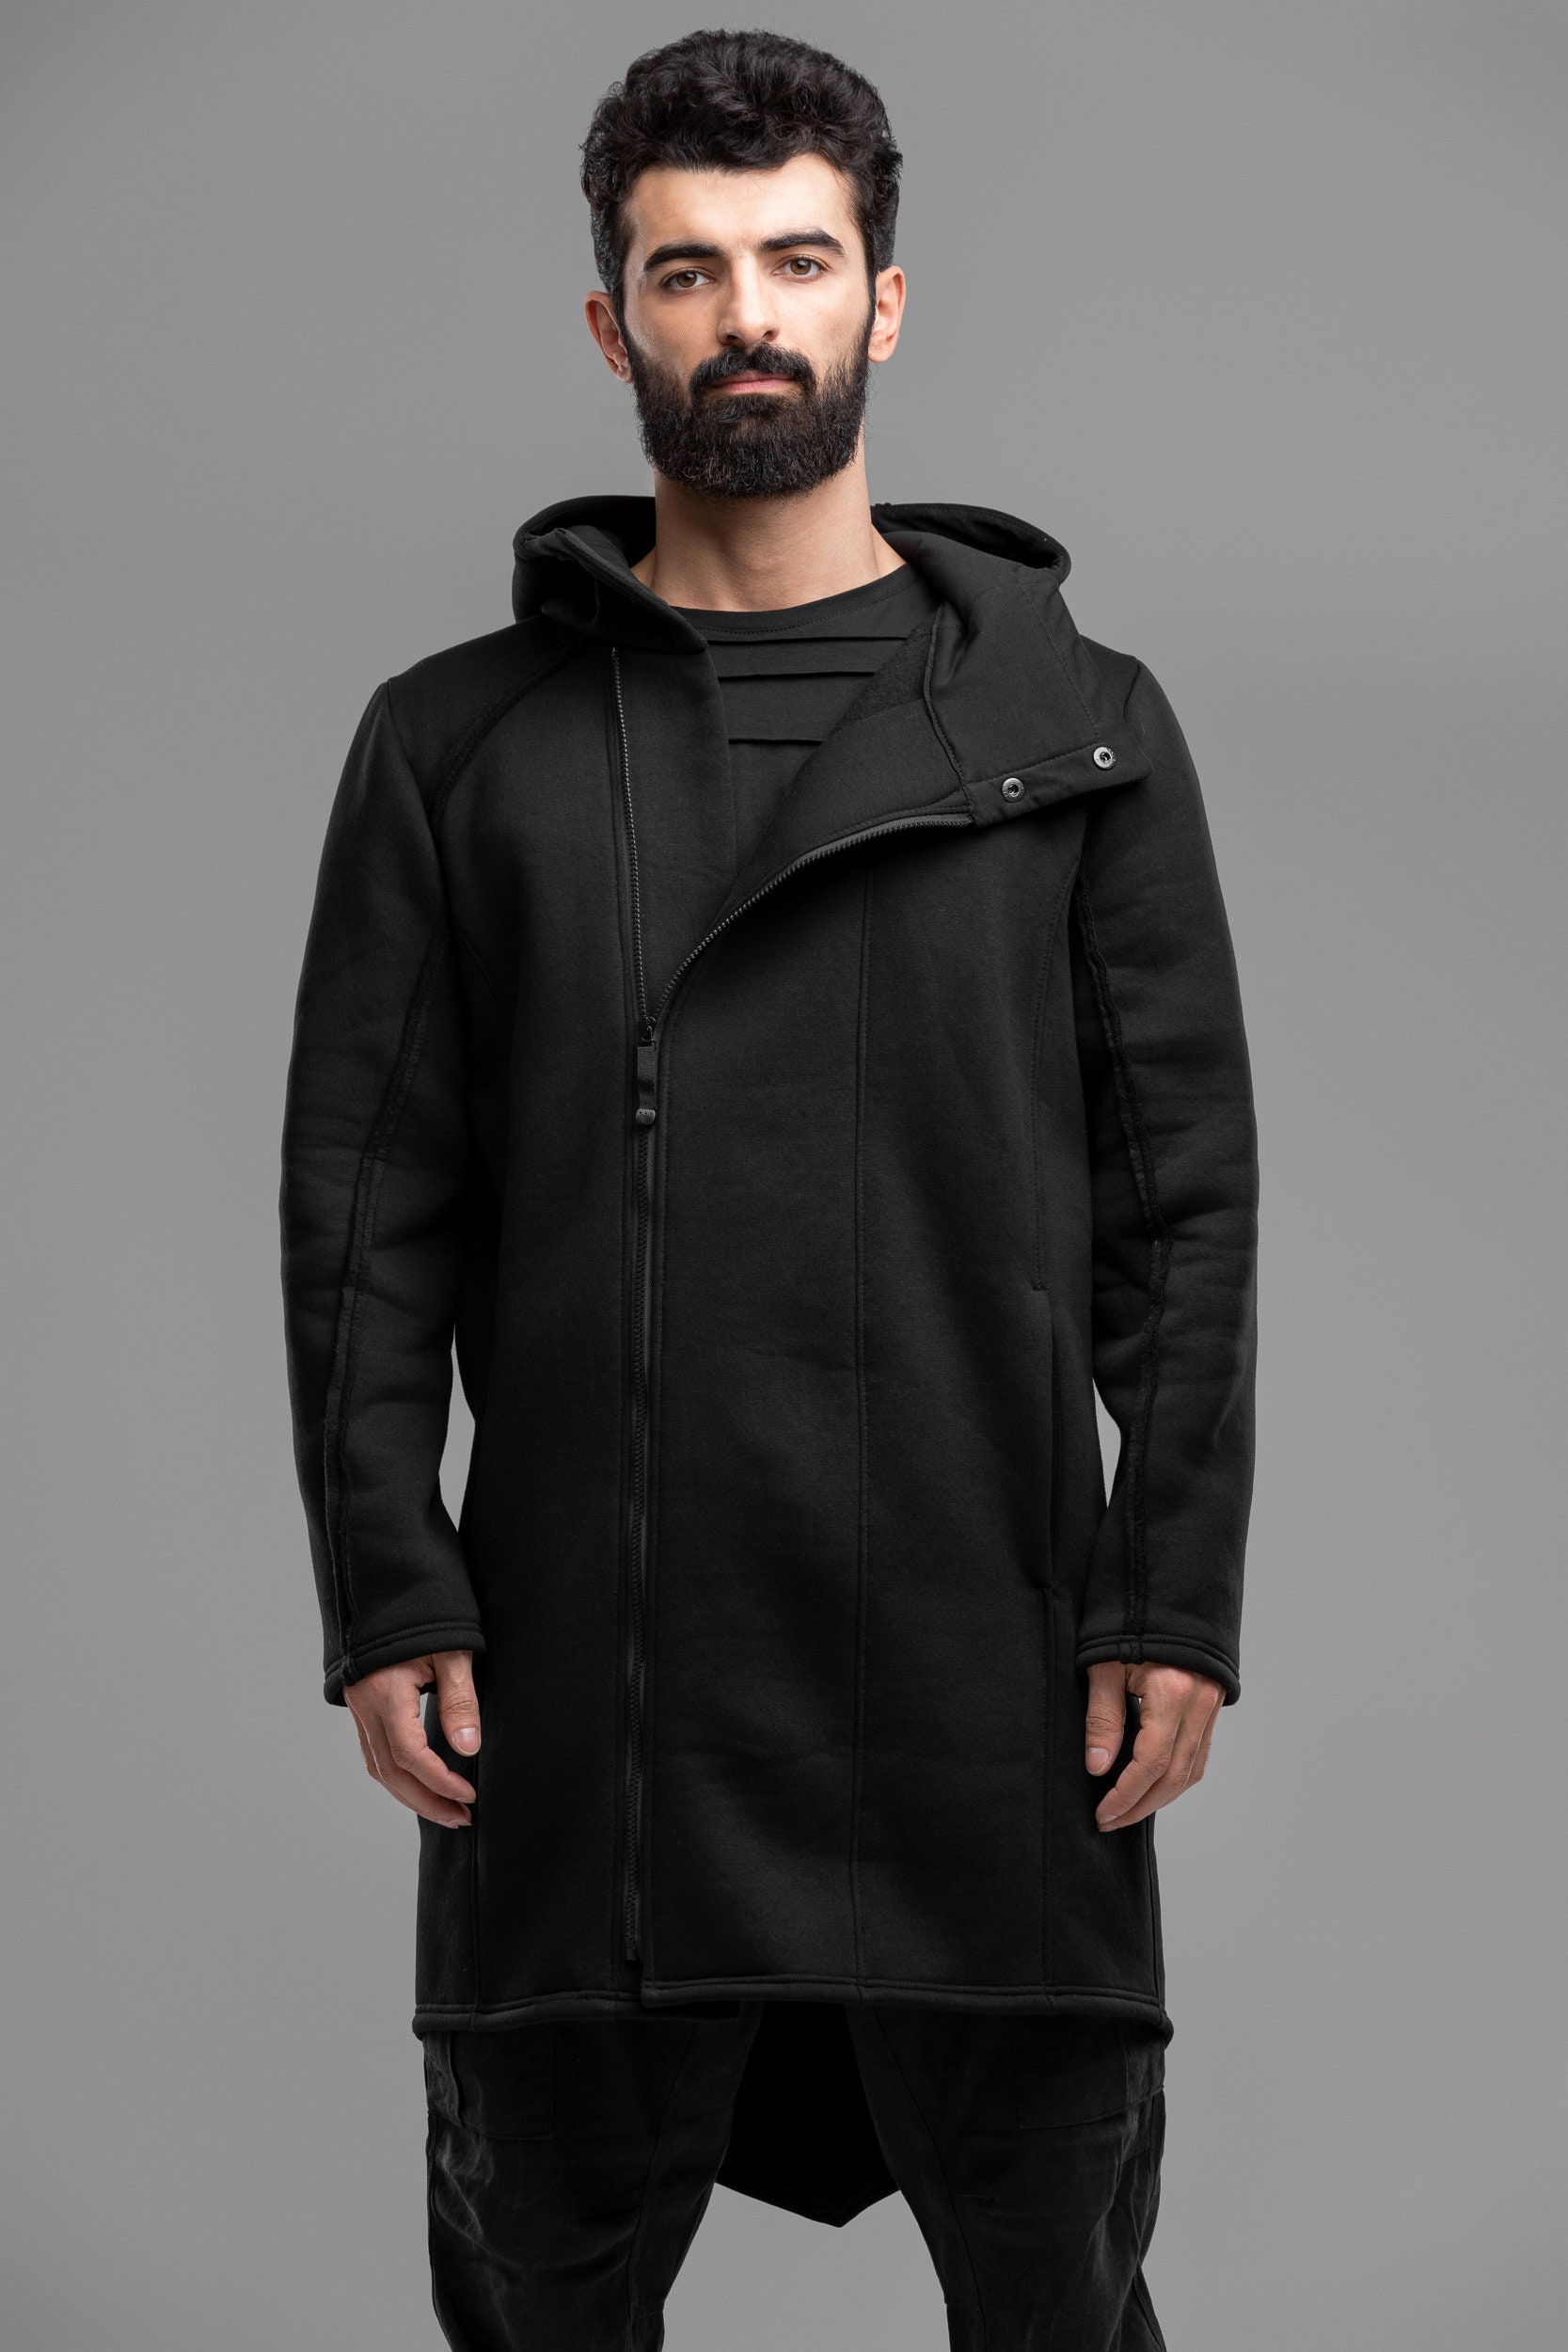 Cardigan men long trench coat black jacket asymmetric top | Etsy